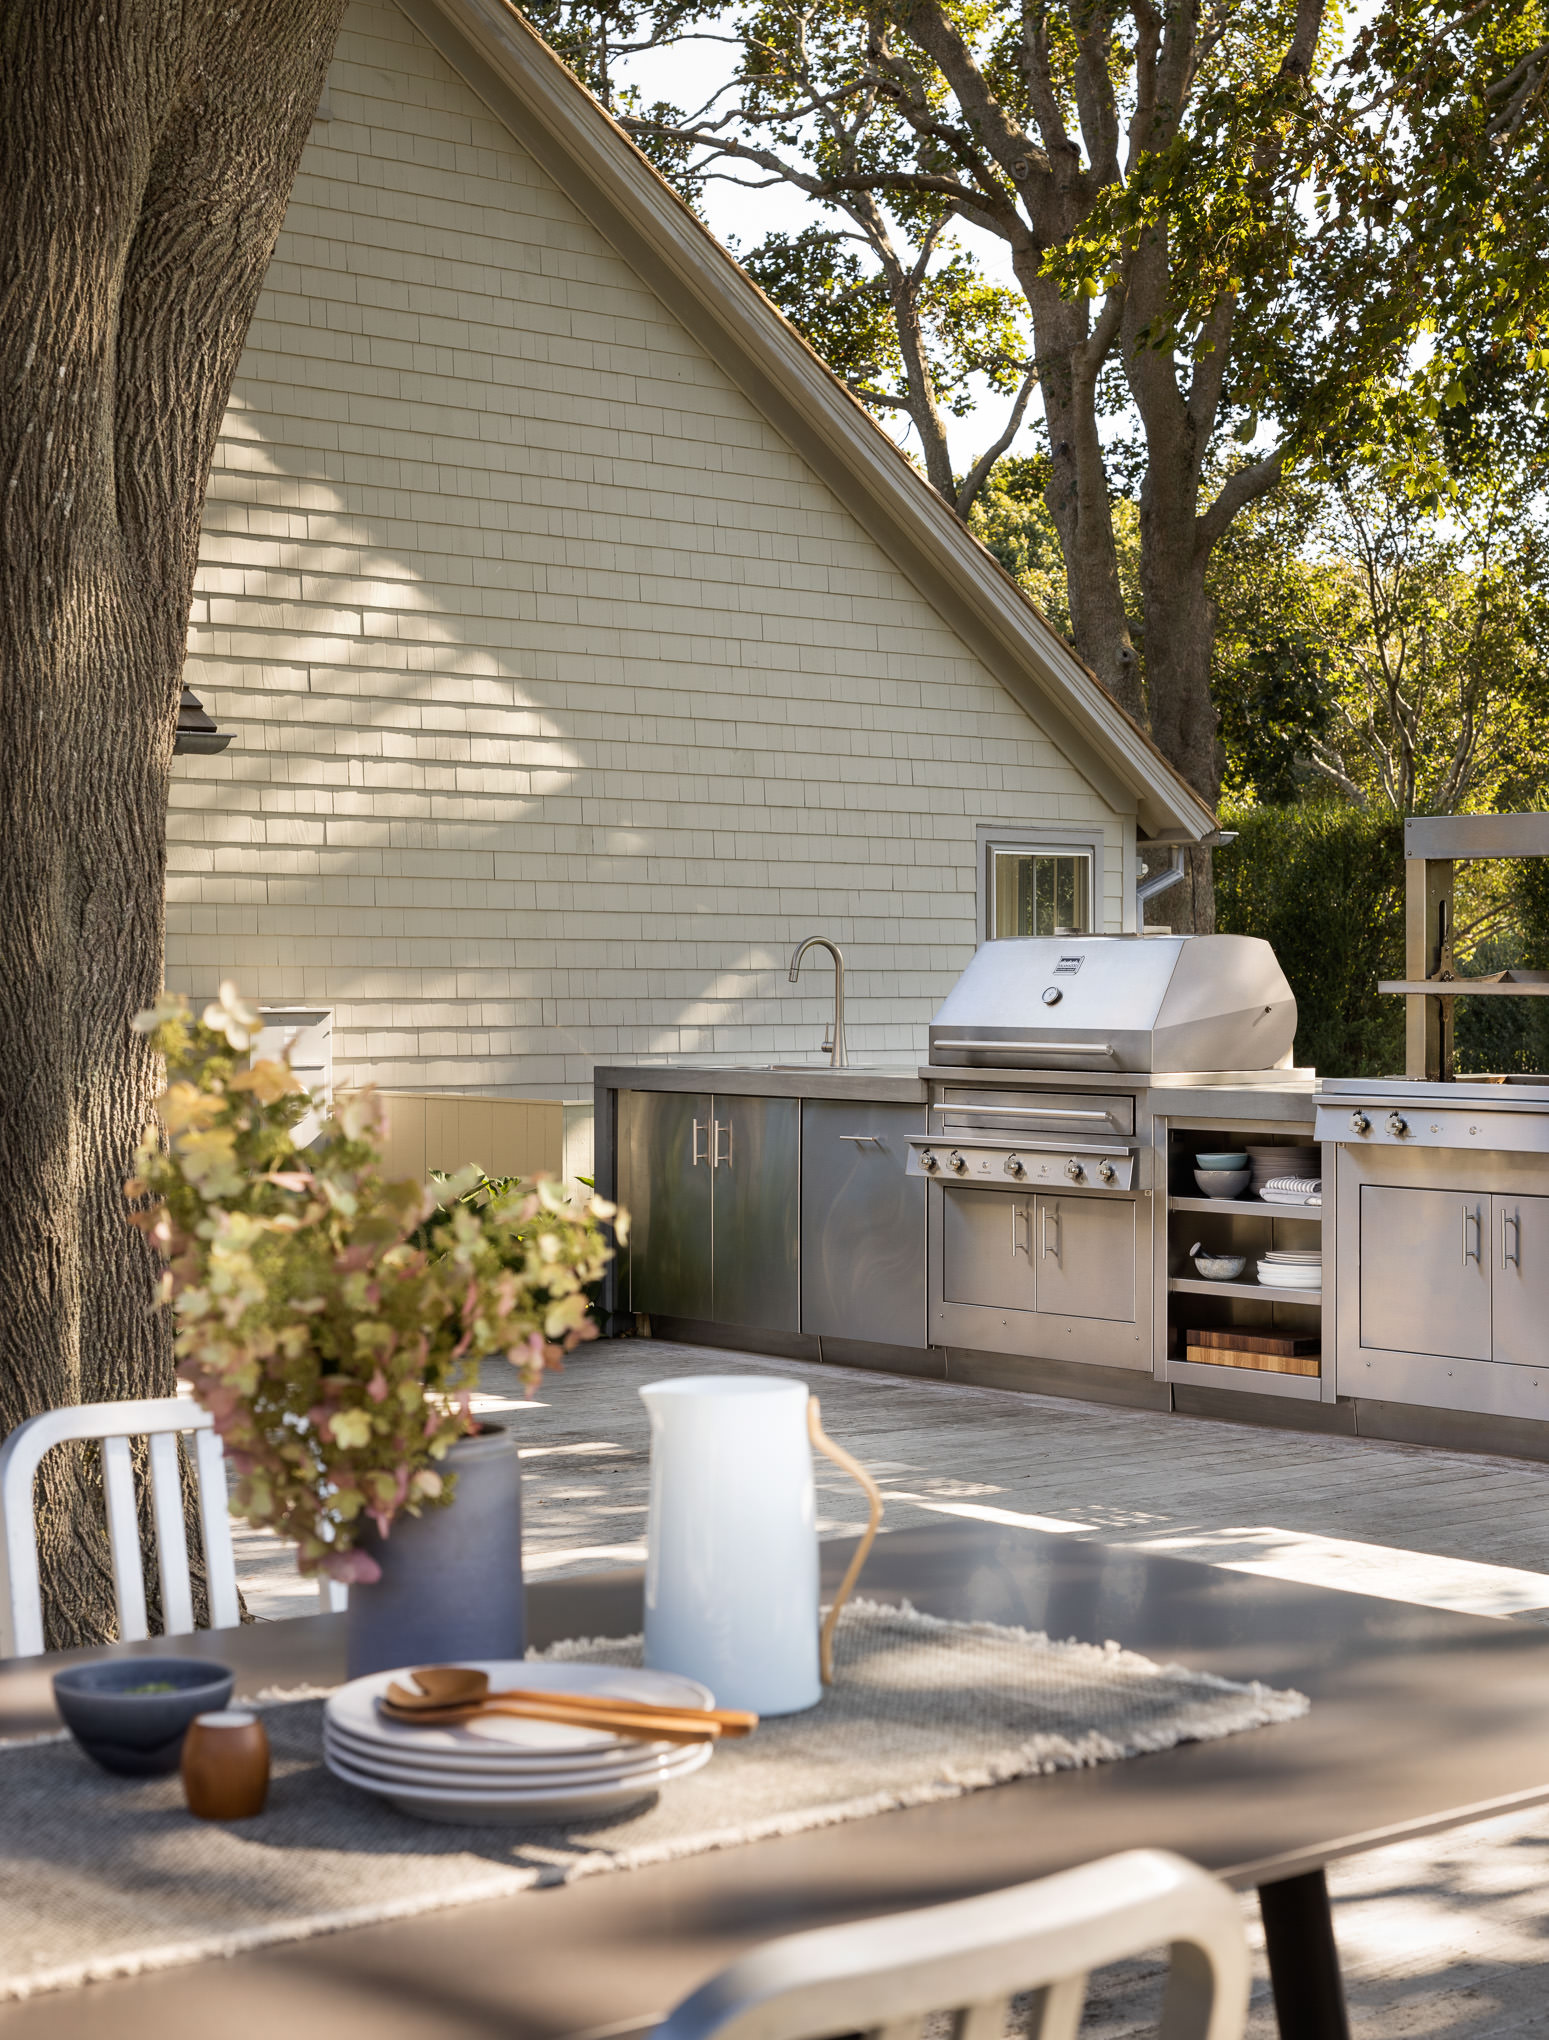 Kalamazoo Outdoor Kitchen Designs - Architectural & Interior Photography